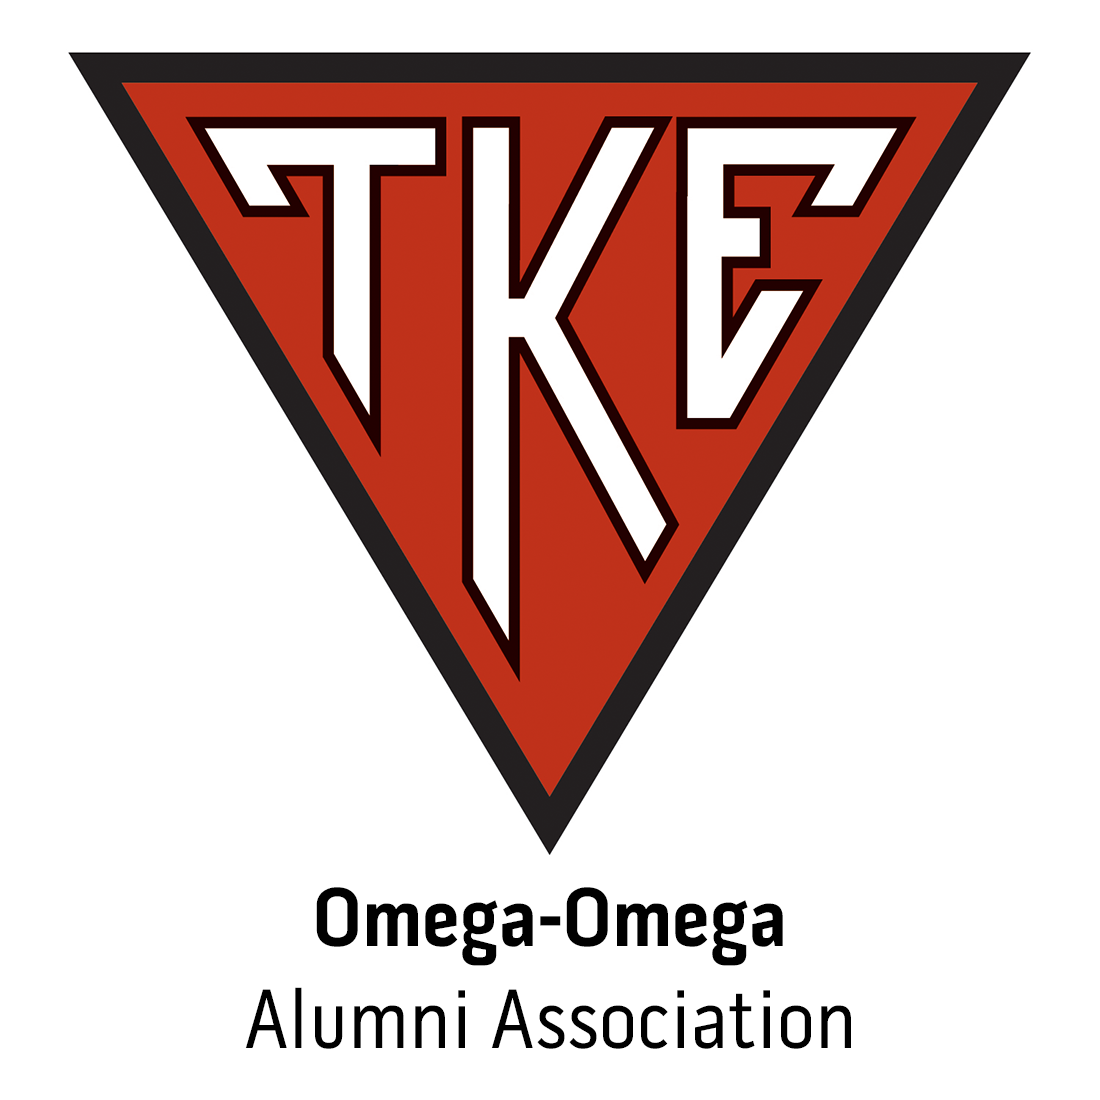 Omega-Omega Alumni Association at University of Tau Kappa Epsilon